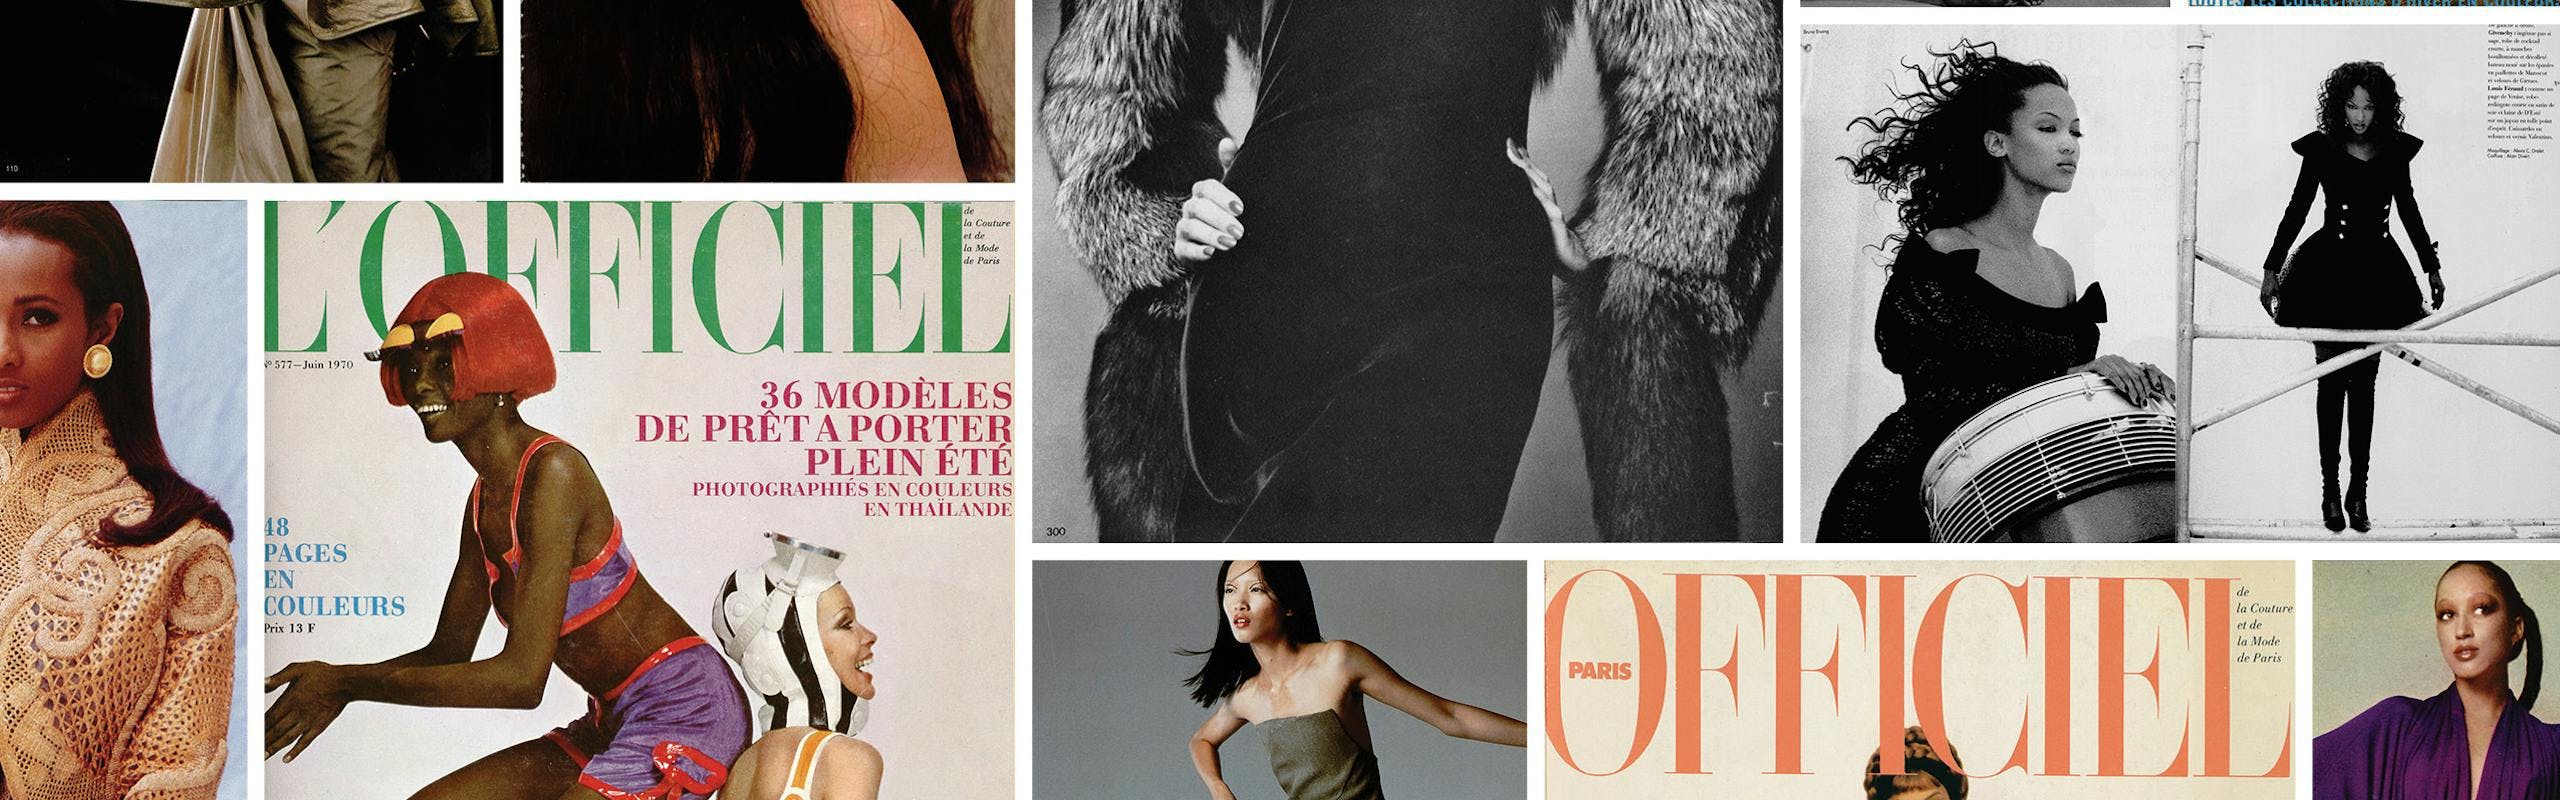 sandi collins black model legacy lofficiel magazine covers with black models